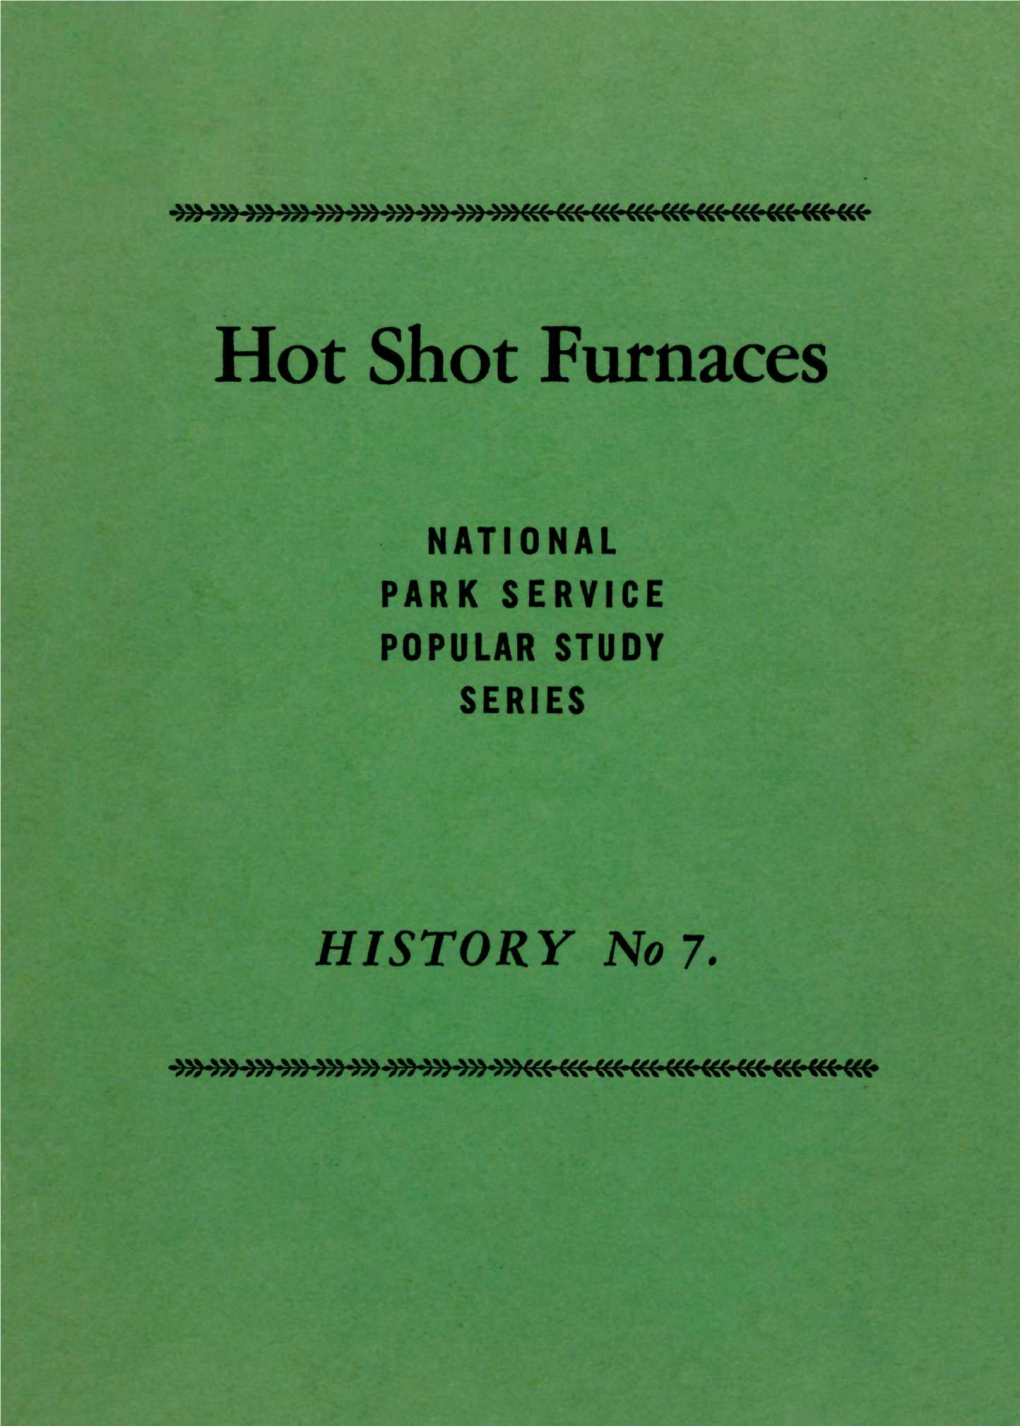 Hot Shot Furnaces